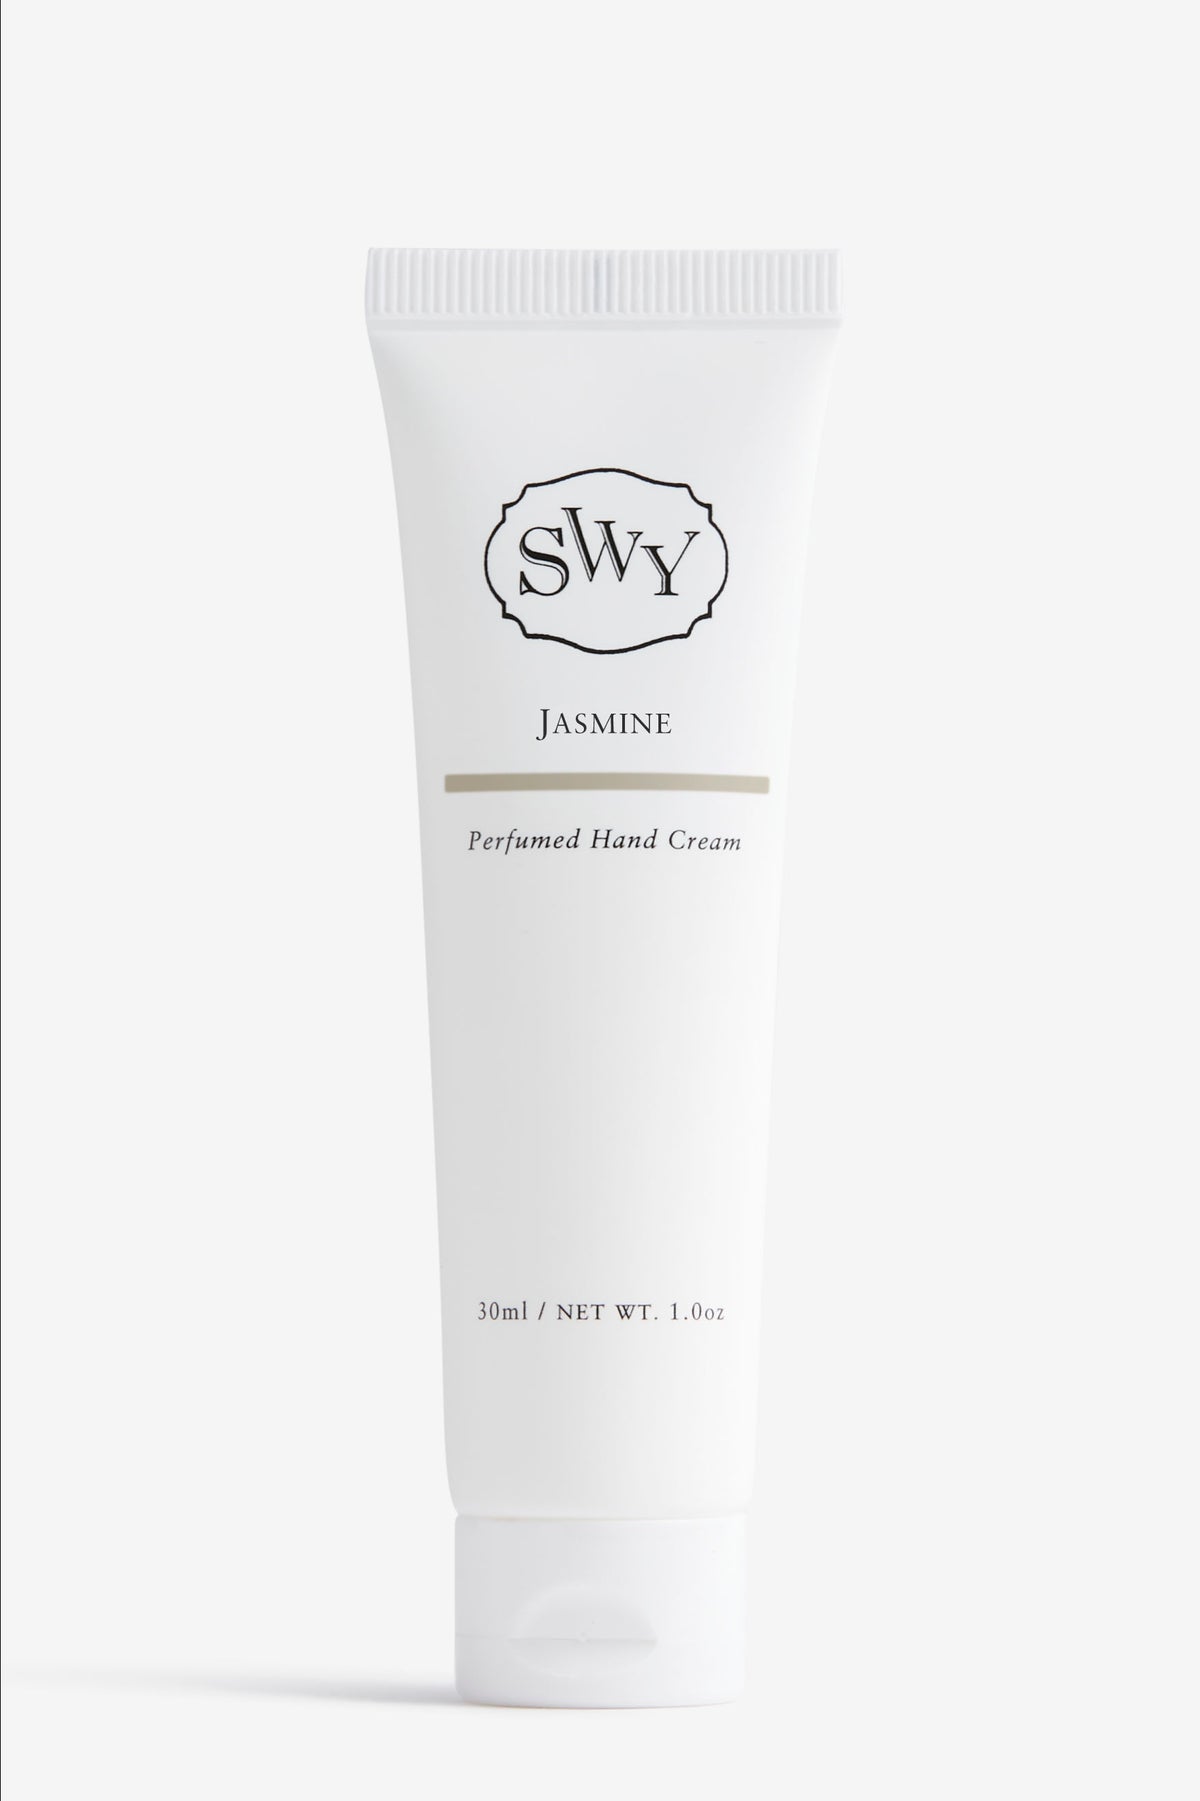 Hand Cream - pocket size - Jasmine